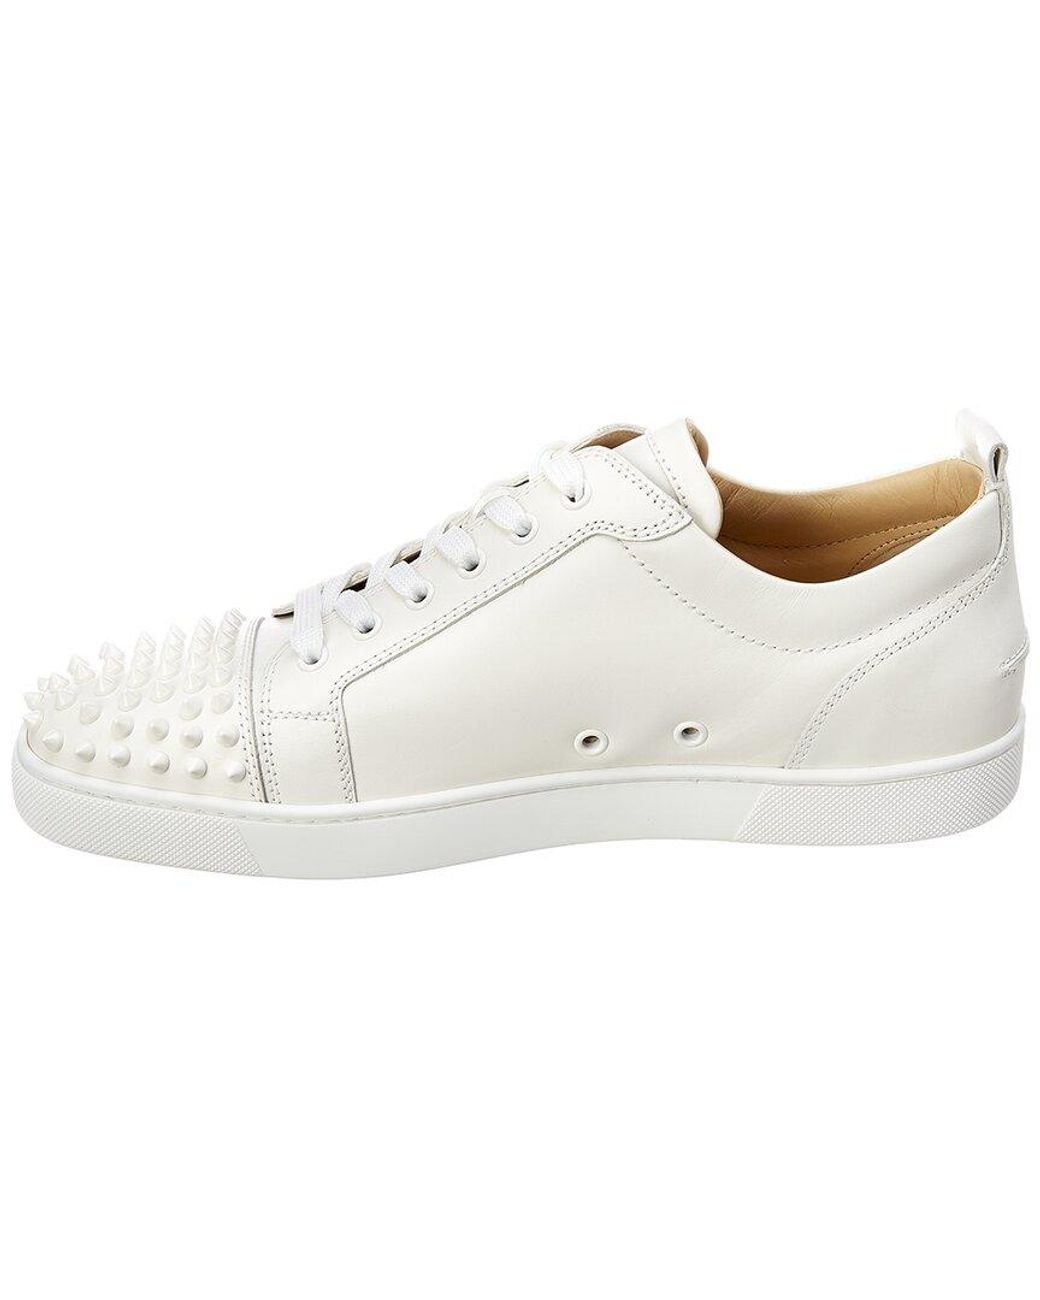 Christian Louboutin Louis Junior Spikes Cap-Toe Leather Sneakers - Men - White Sneakers - EU 41